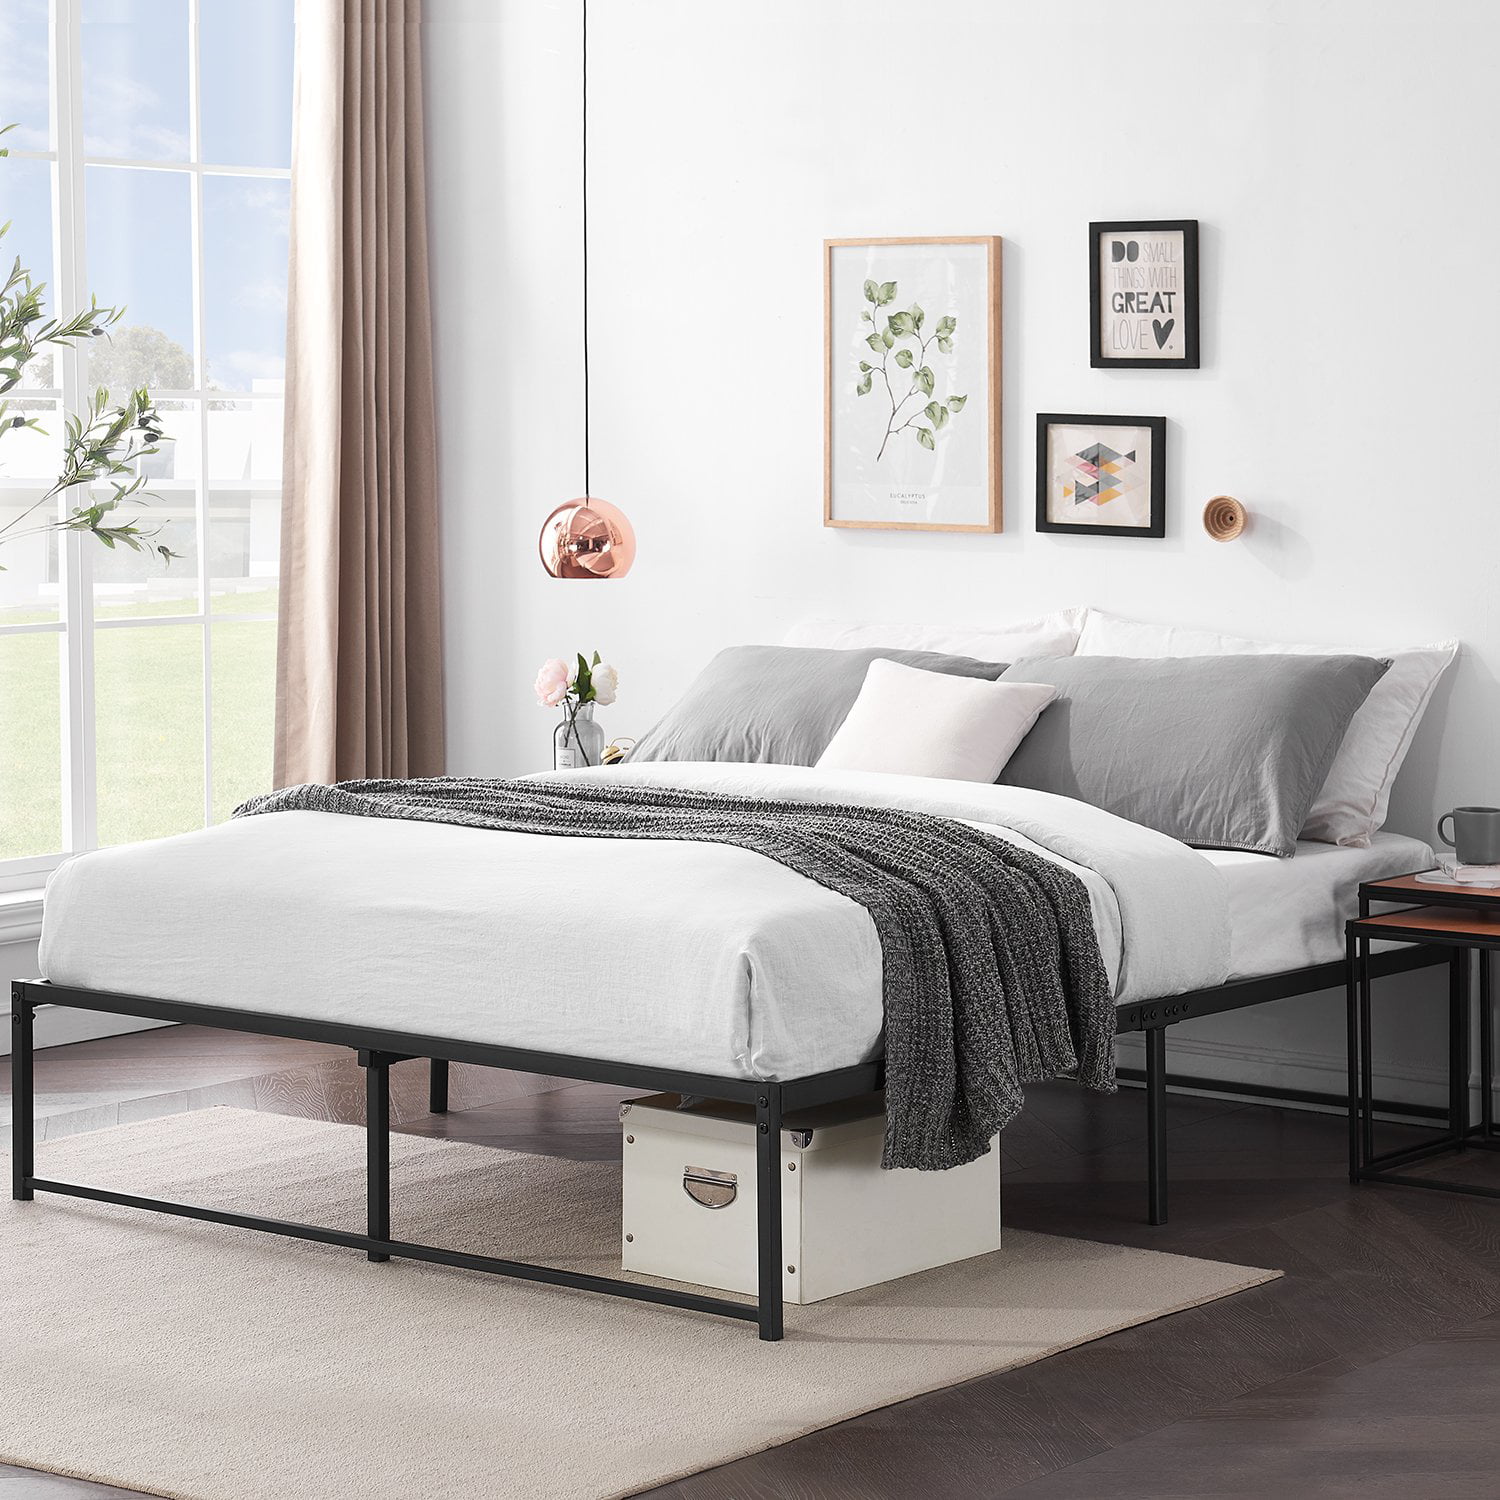 Vecelo Metal Platform Bed Frame Full, Full Size Bed Frame With Storage No Headboard